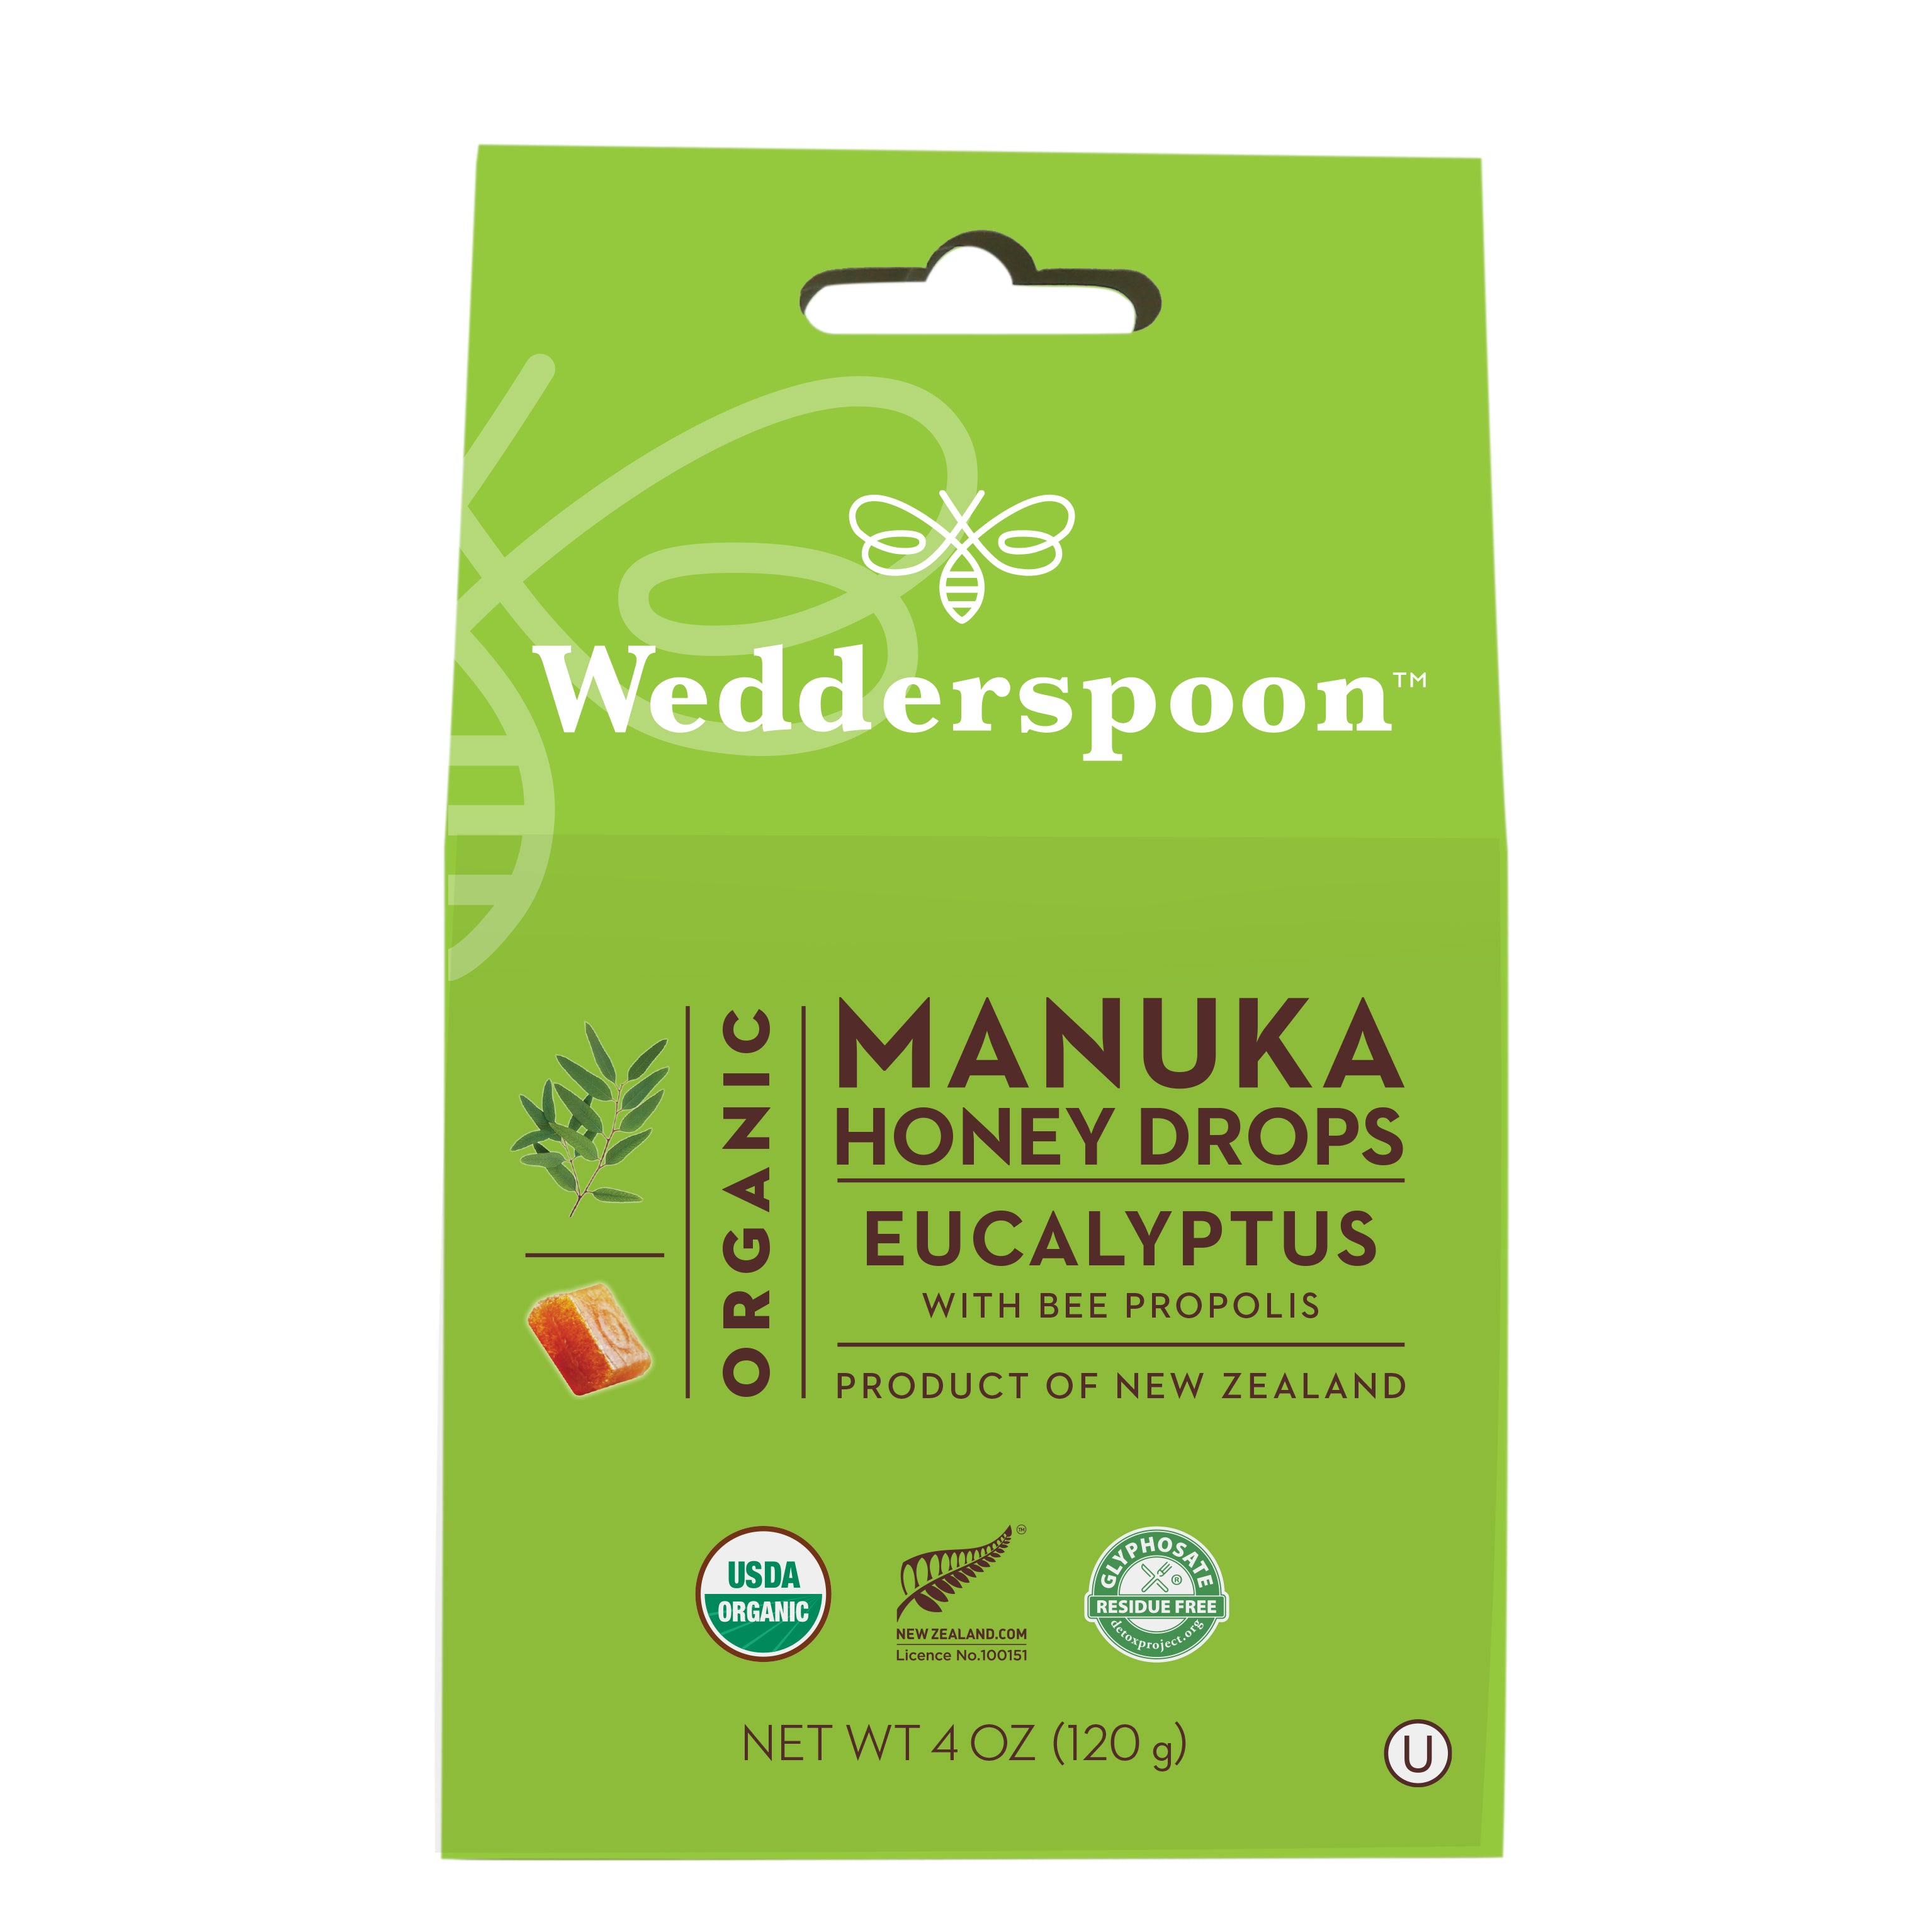 Wedderspoon Manuka Honey Drops Eucalyptus 